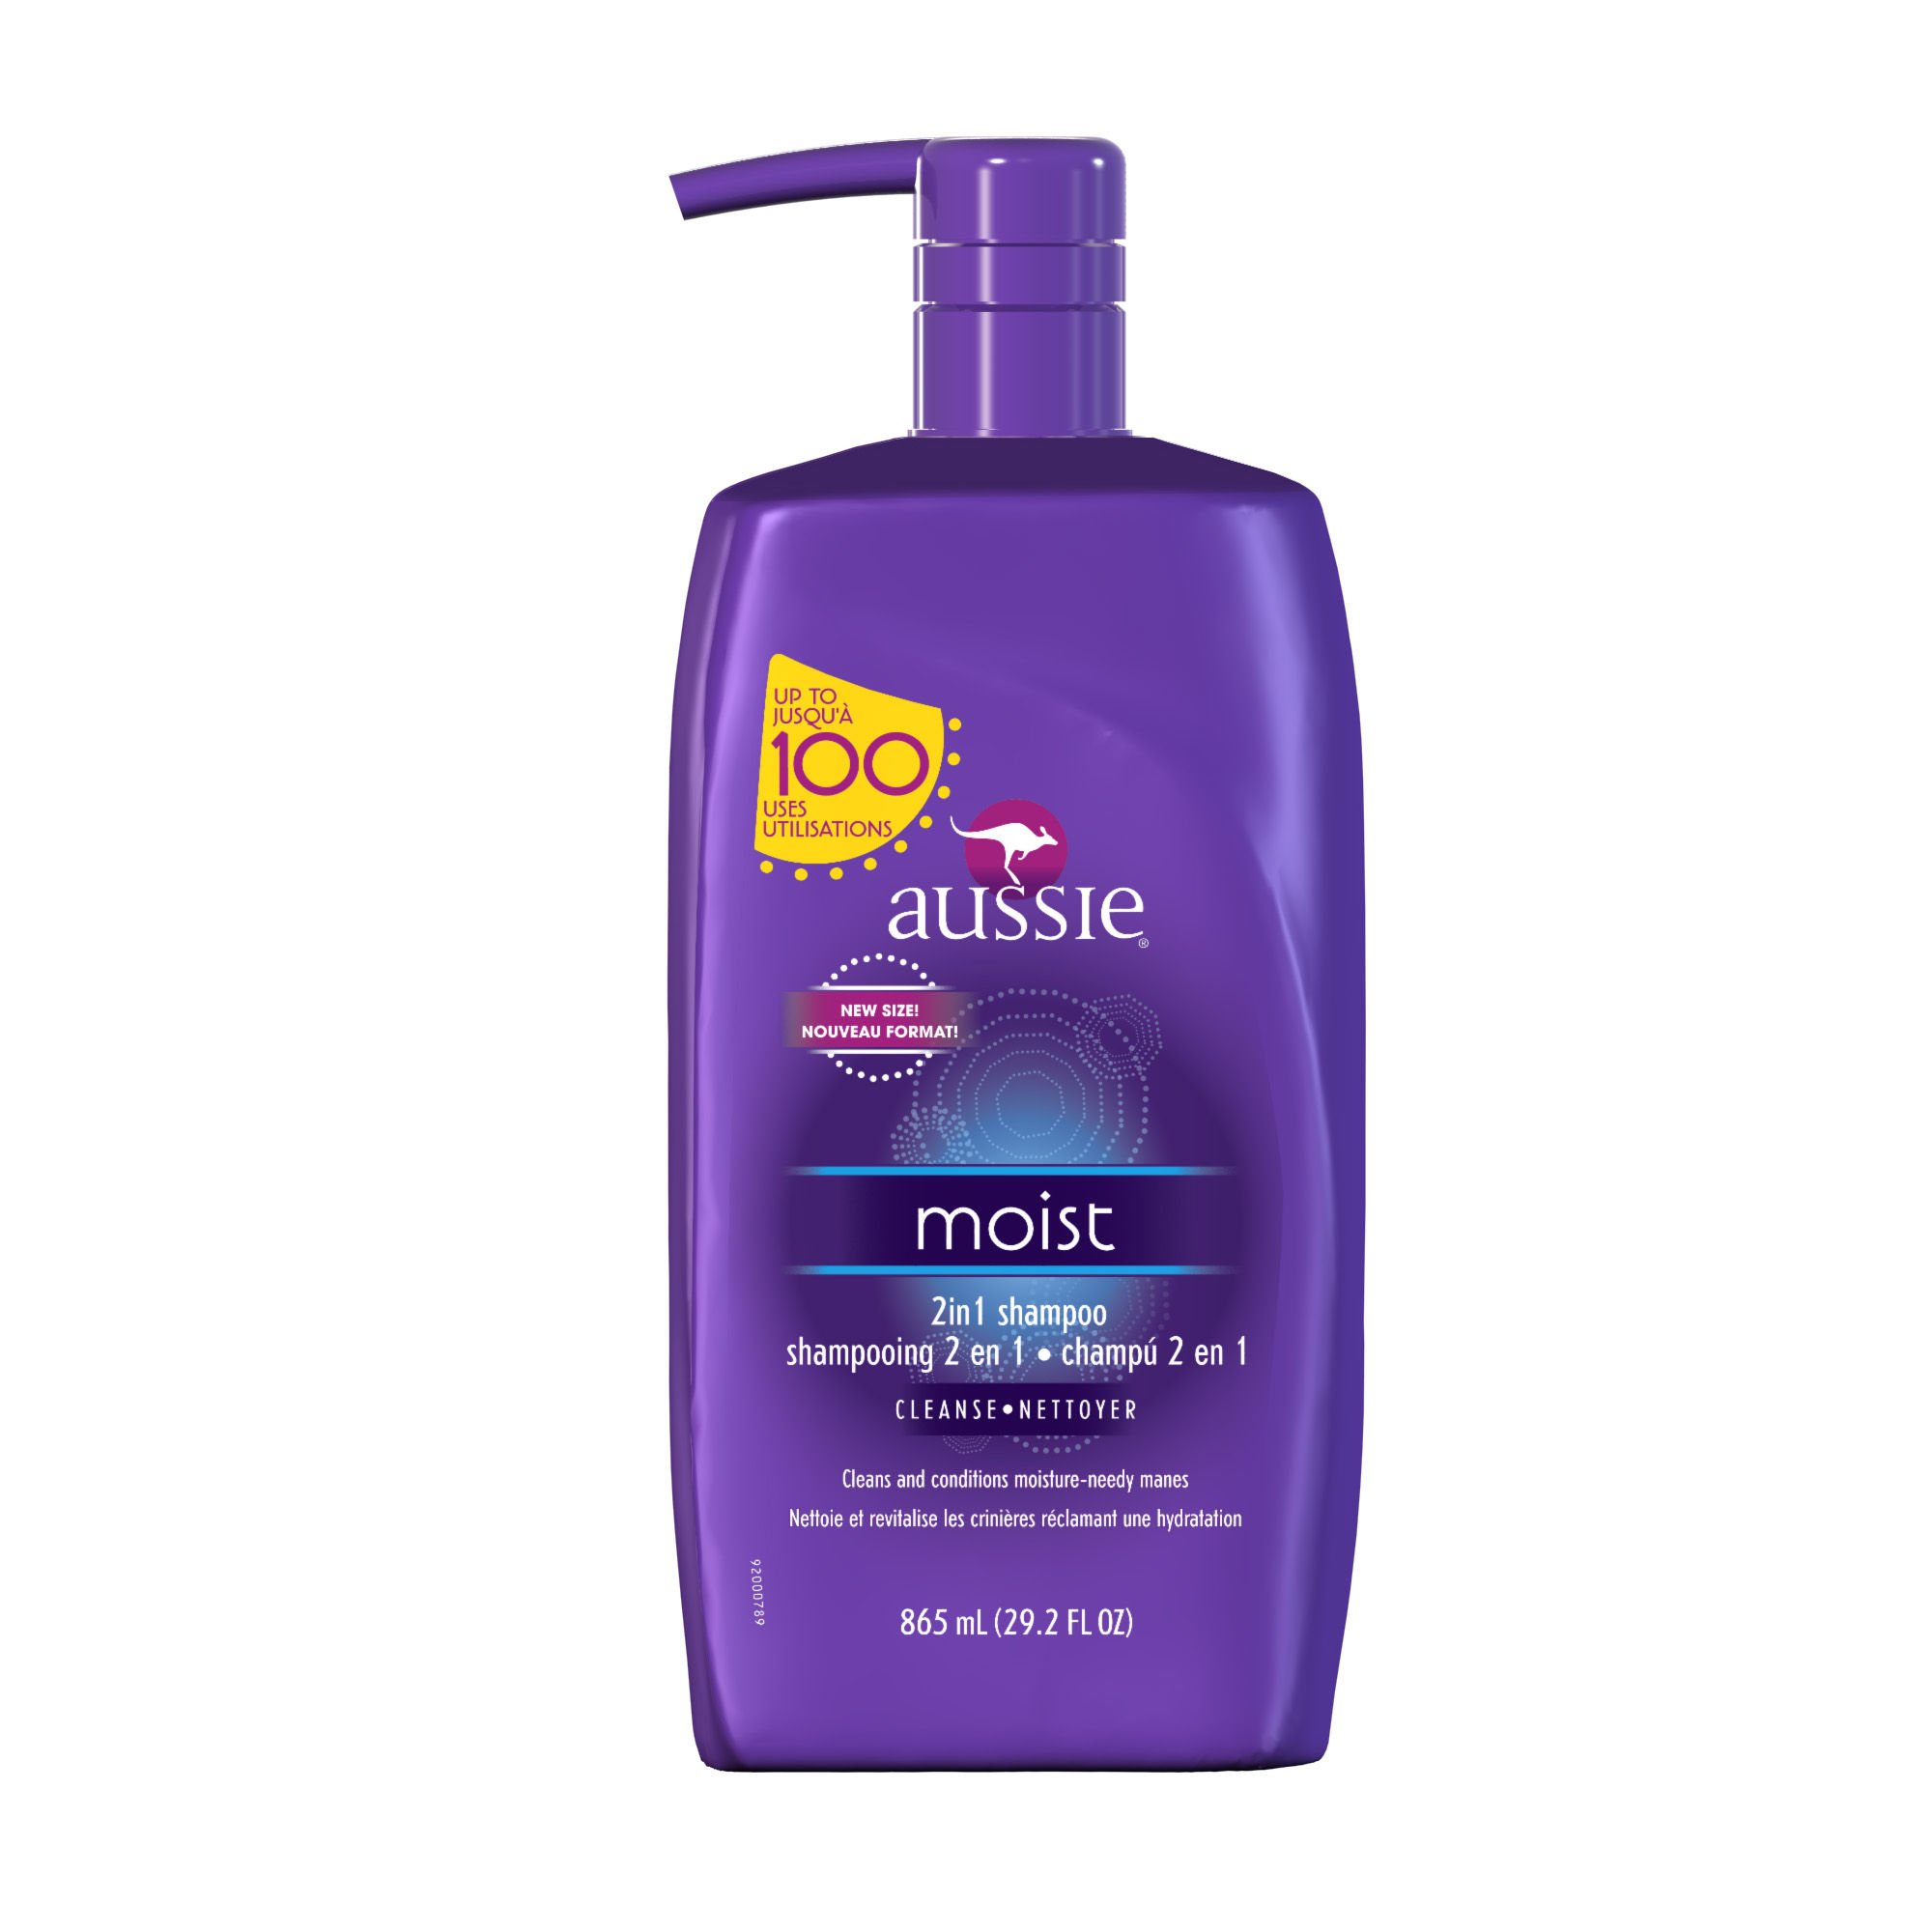 Dare Glat Feasibility Aussie Moist Shampoo 2-in-1 - Shop Shampoo & Conditioner at H-E-B